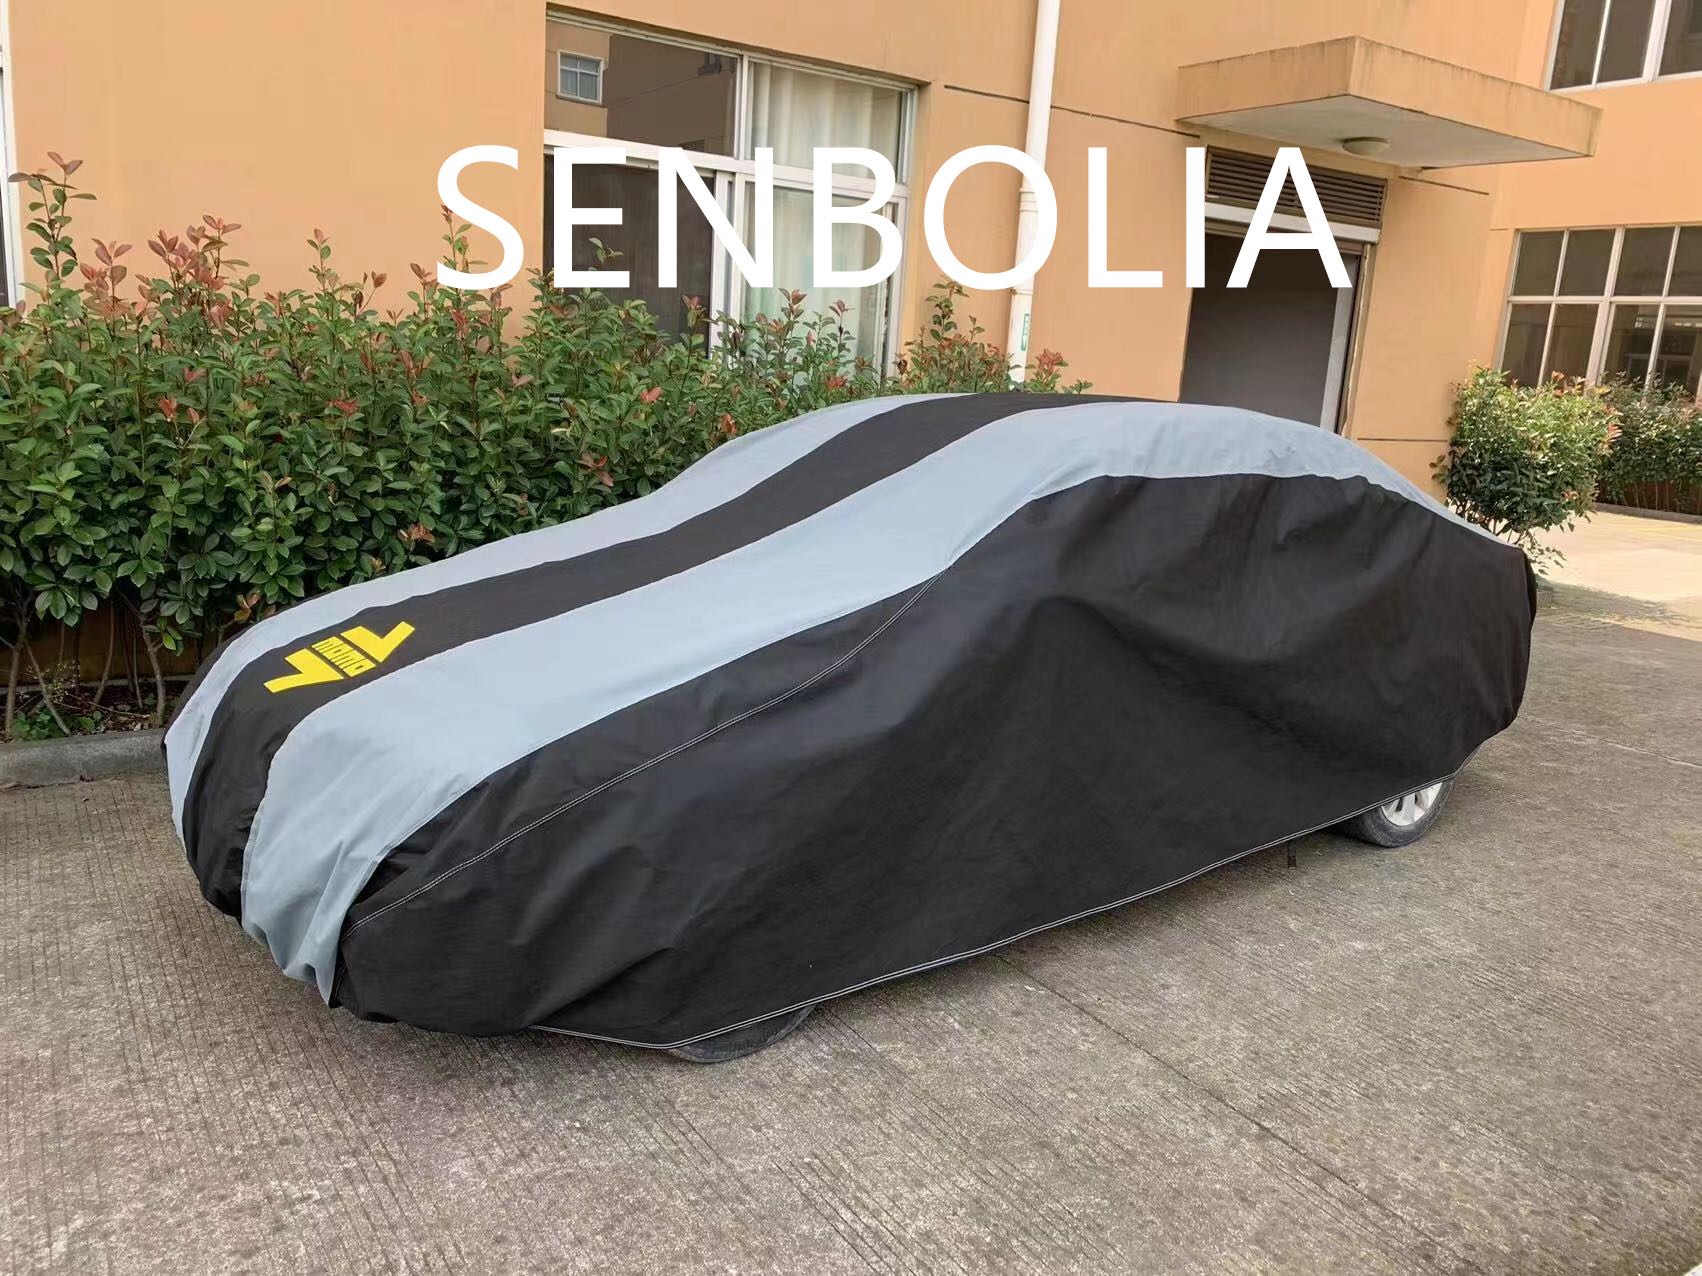 senbolia-1汽车 车衣 防嗮 防雨 四季通用 厂家直销欢迎前来采购汽车用品详情3